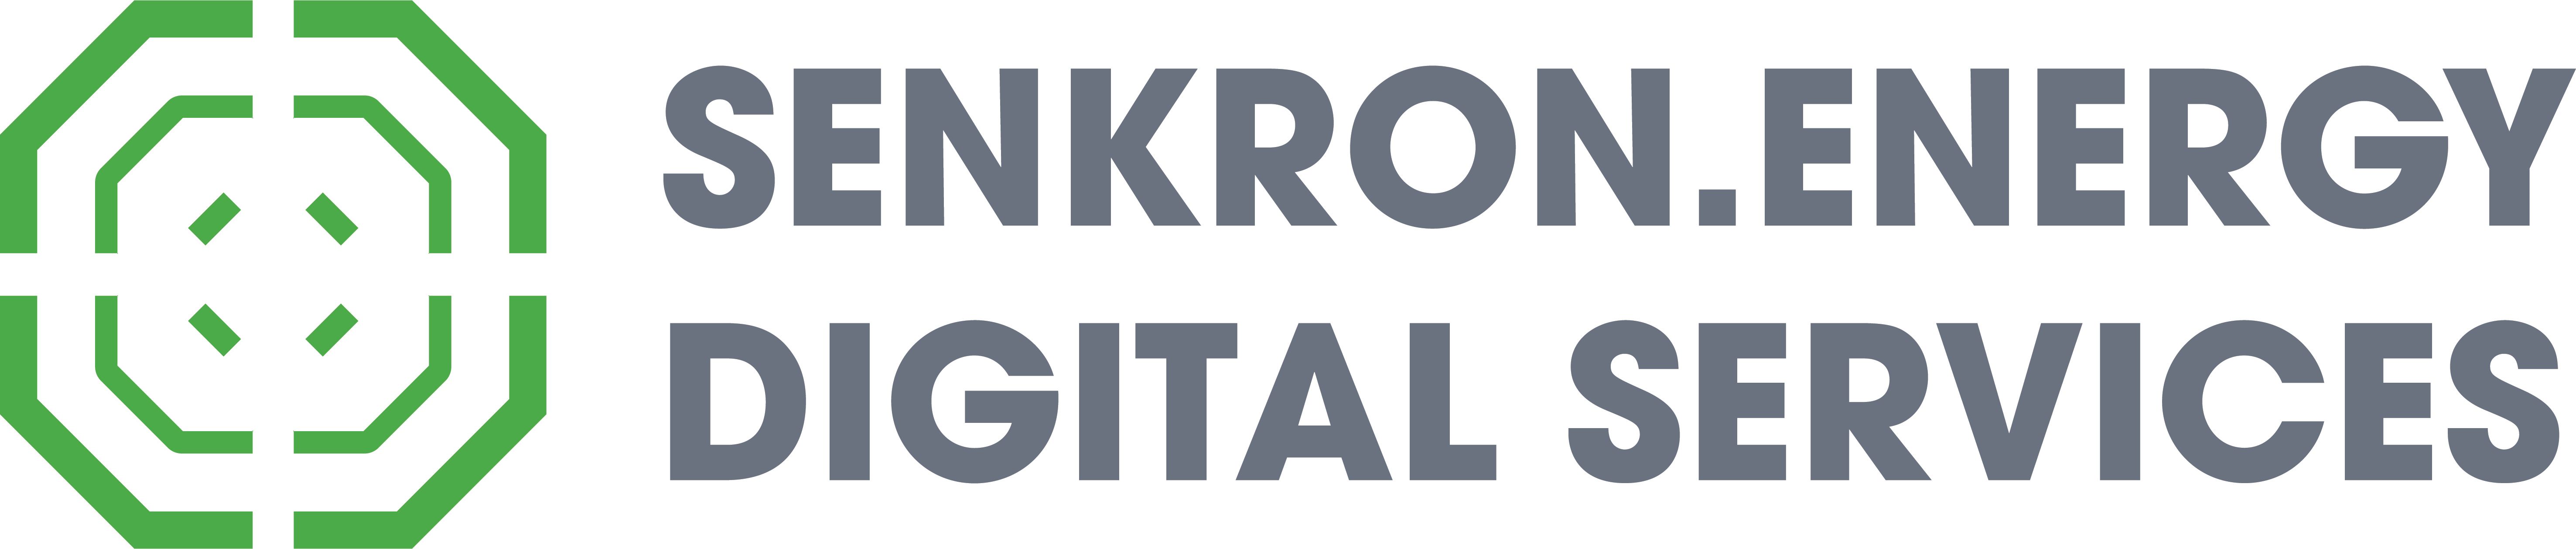 Senkron.Energy Digital Services’